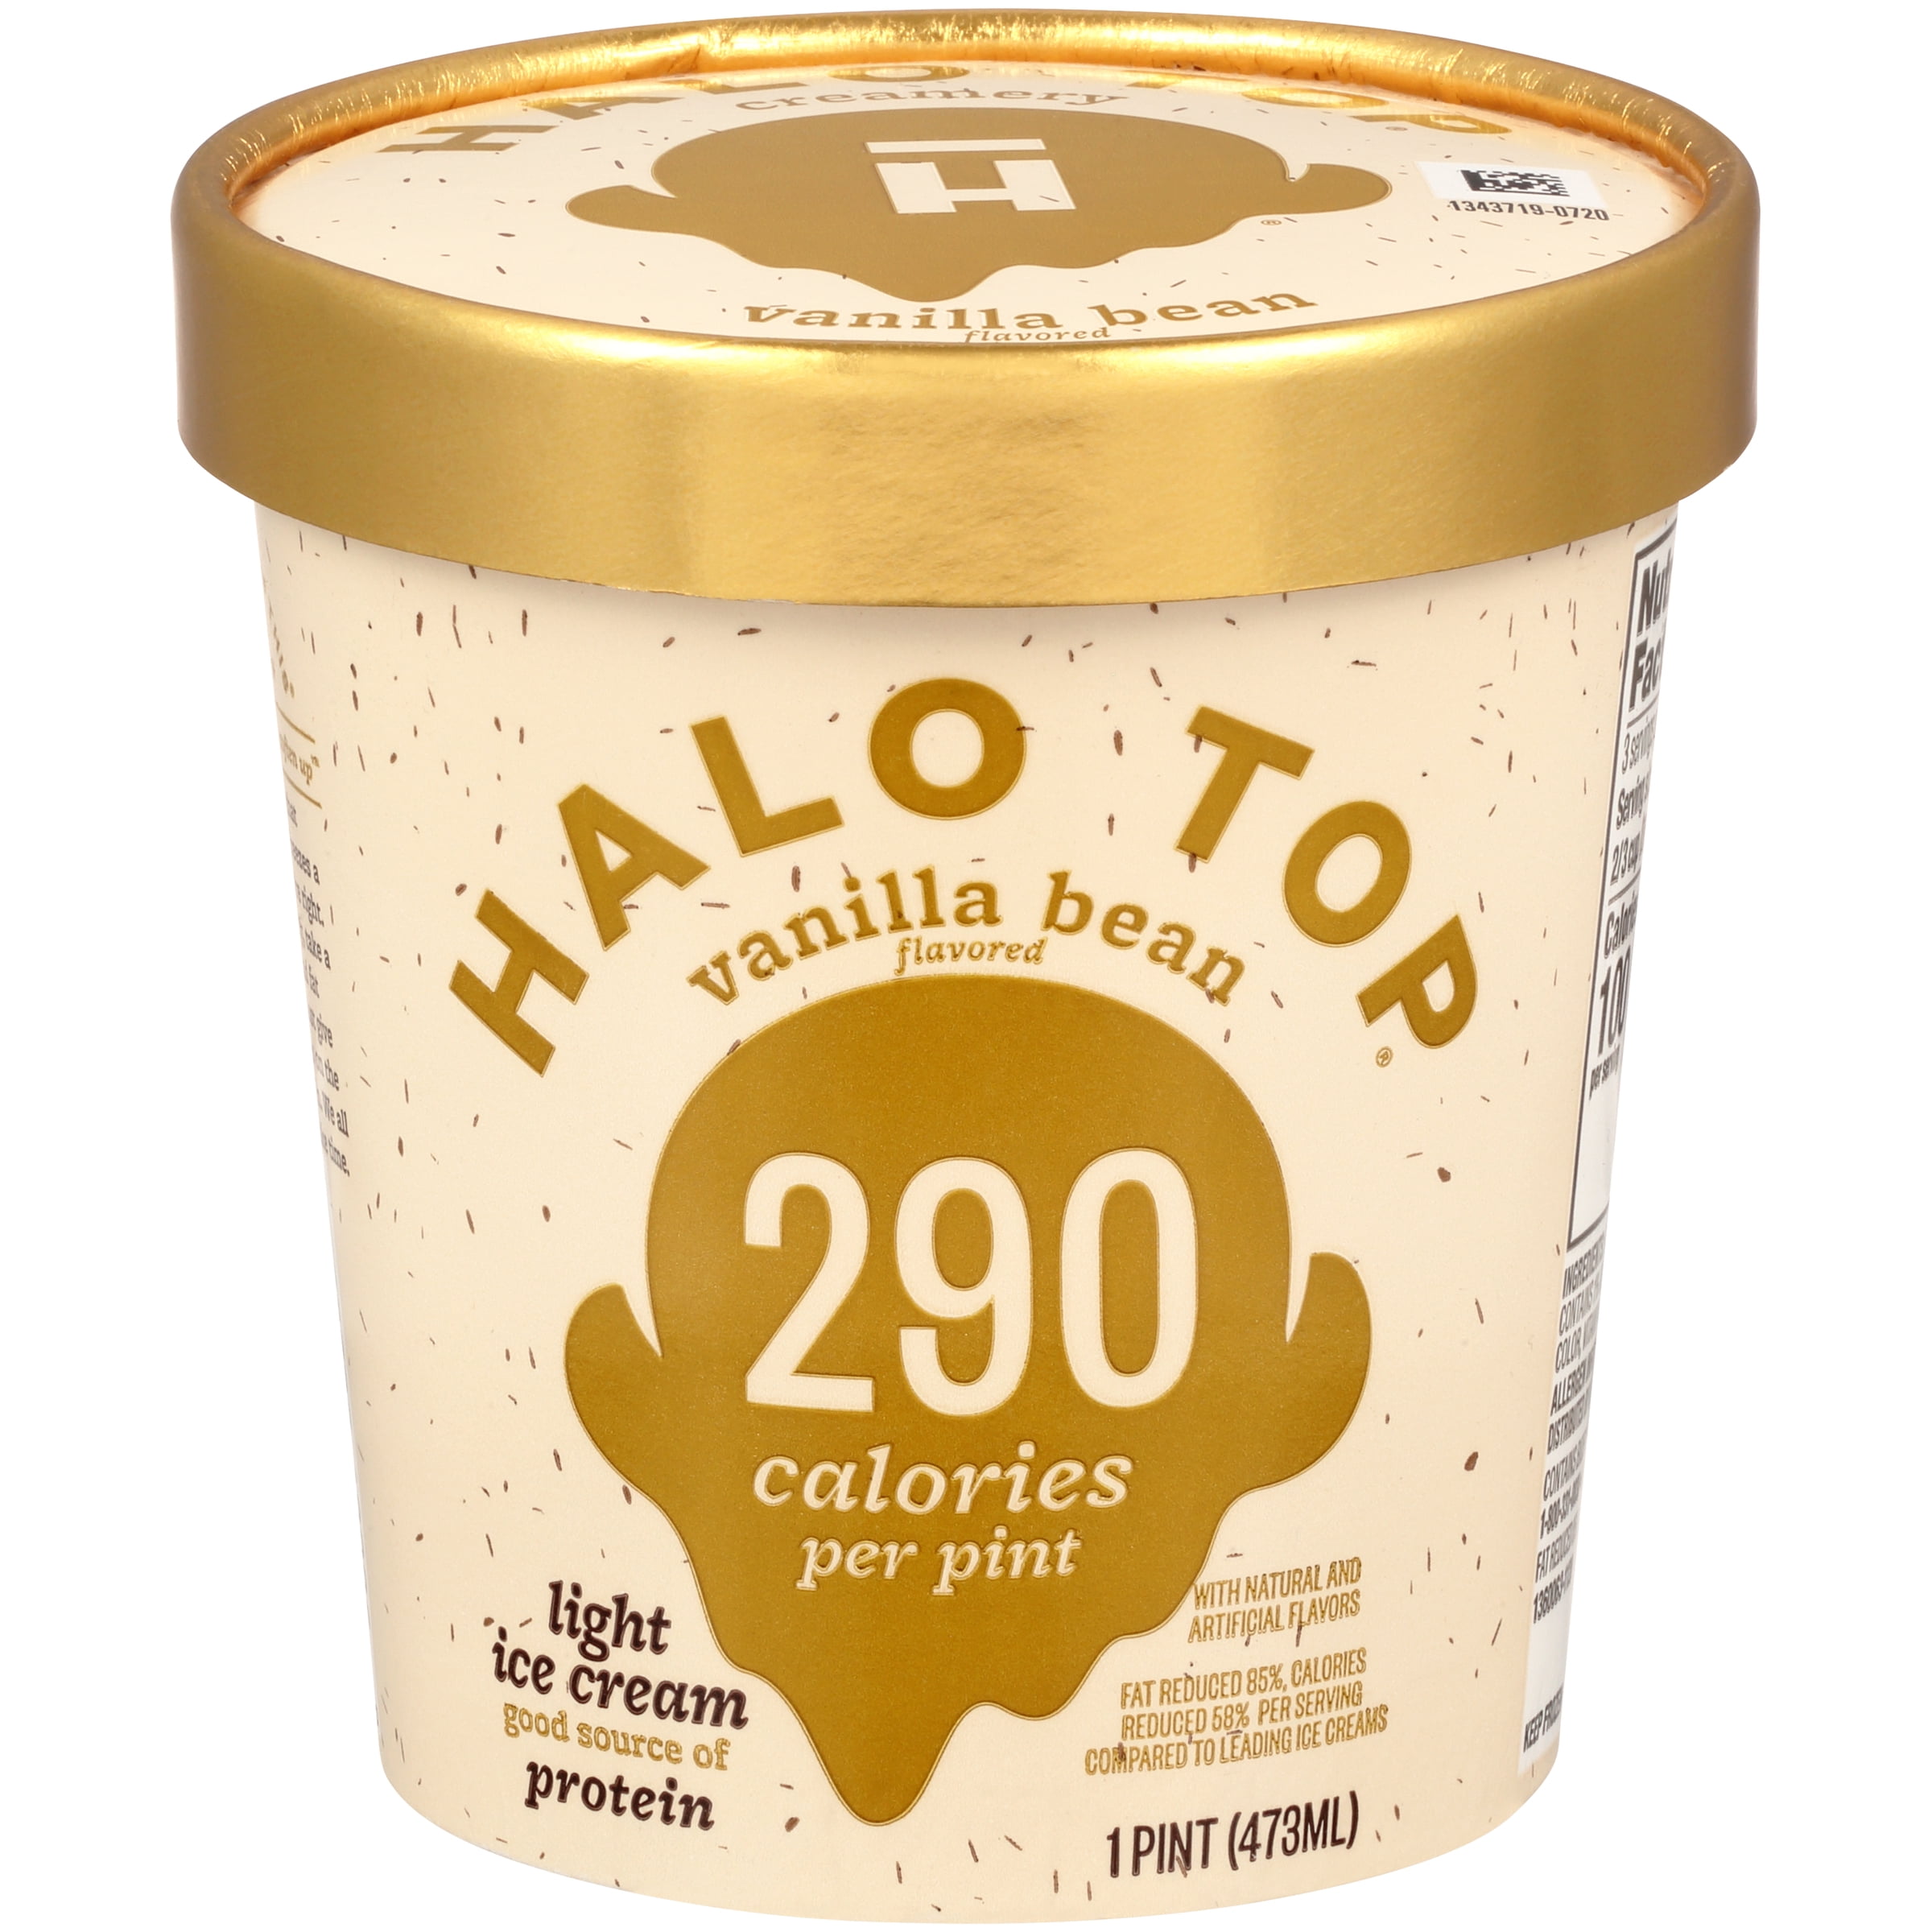 Halo Top LowCalorie Vanilla Bean Light Ice Cream Pint, 16 fl oz